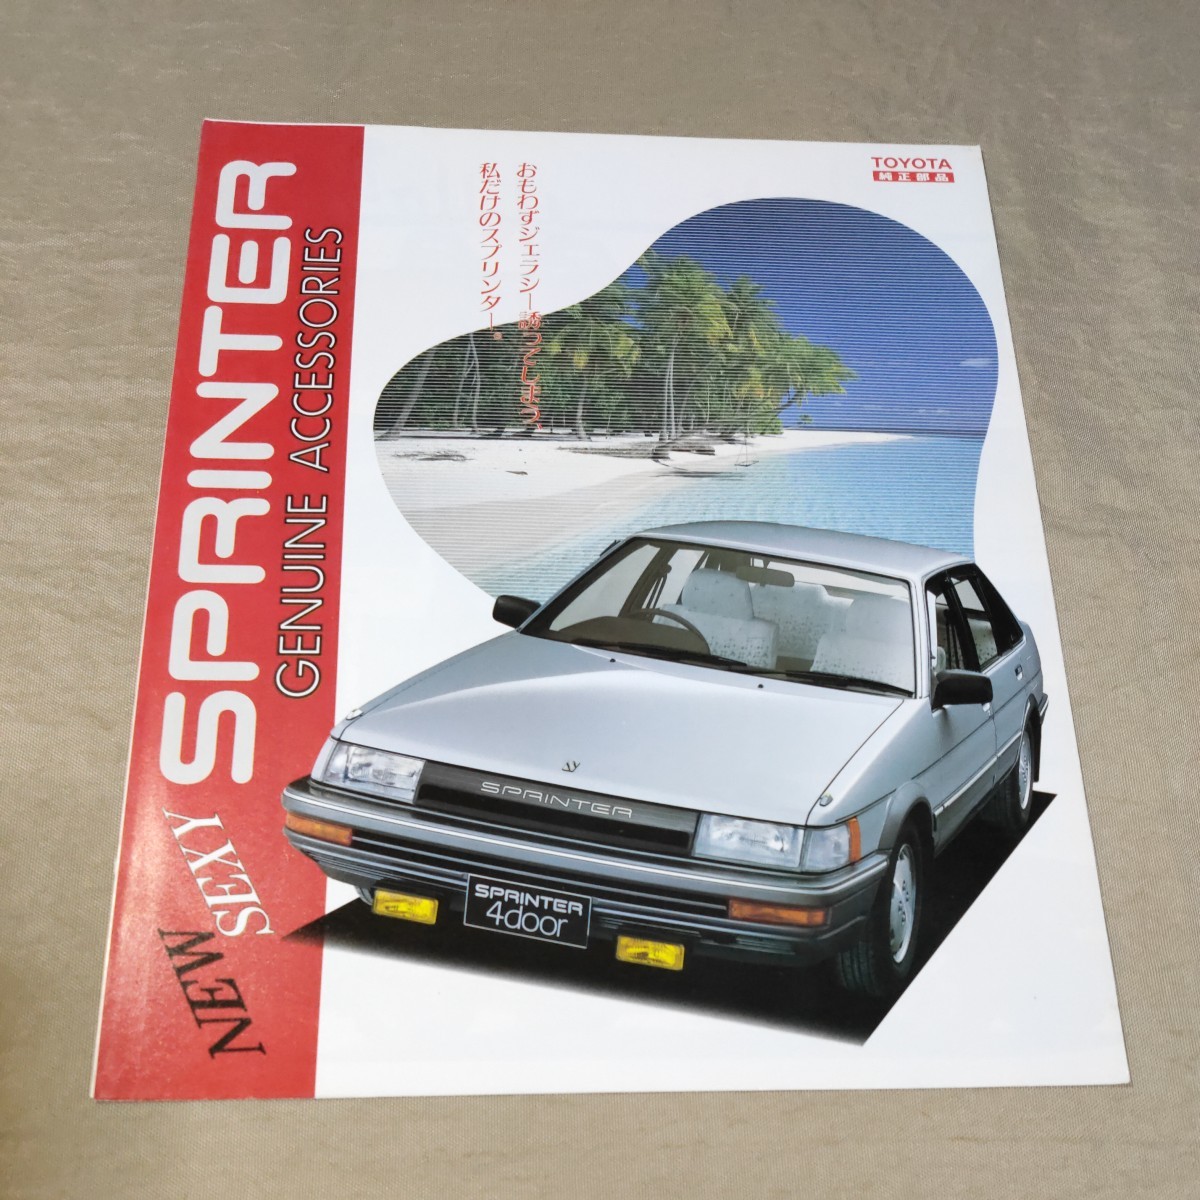  каталог Sprinter / Trueno аксессуары / опция AE86/AE80/AE81/AE82 Showa 60 год 5 месяц 1985-5